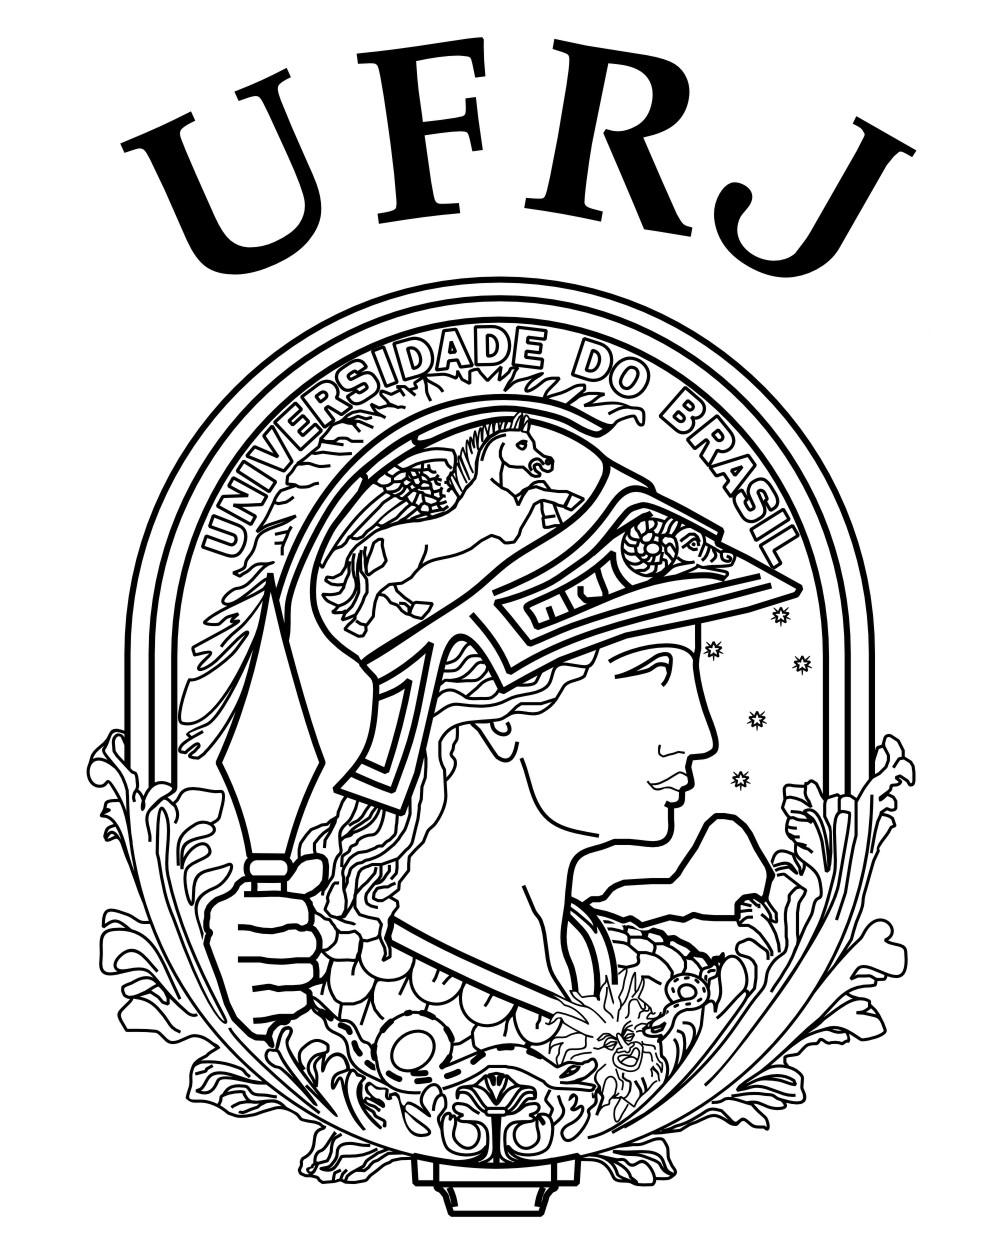 logo_ufrj